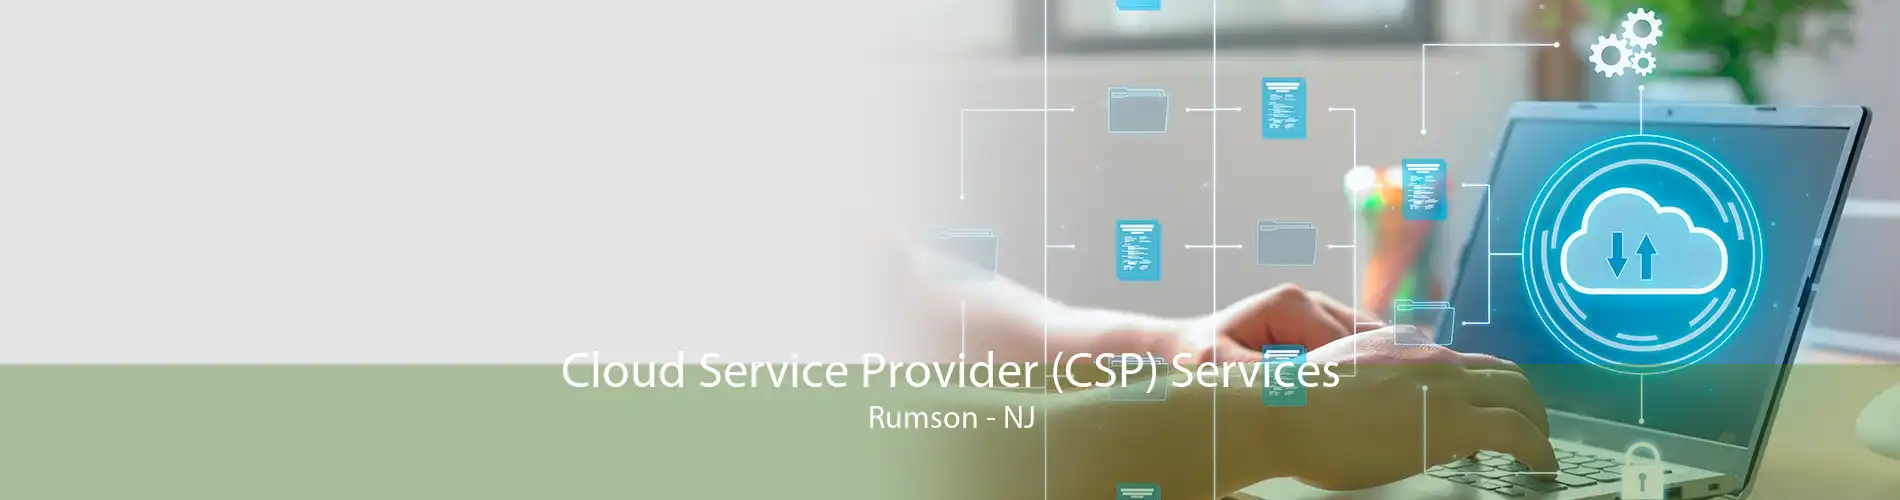 Cloud Service Provider (CSP) Services Rumson - NJ